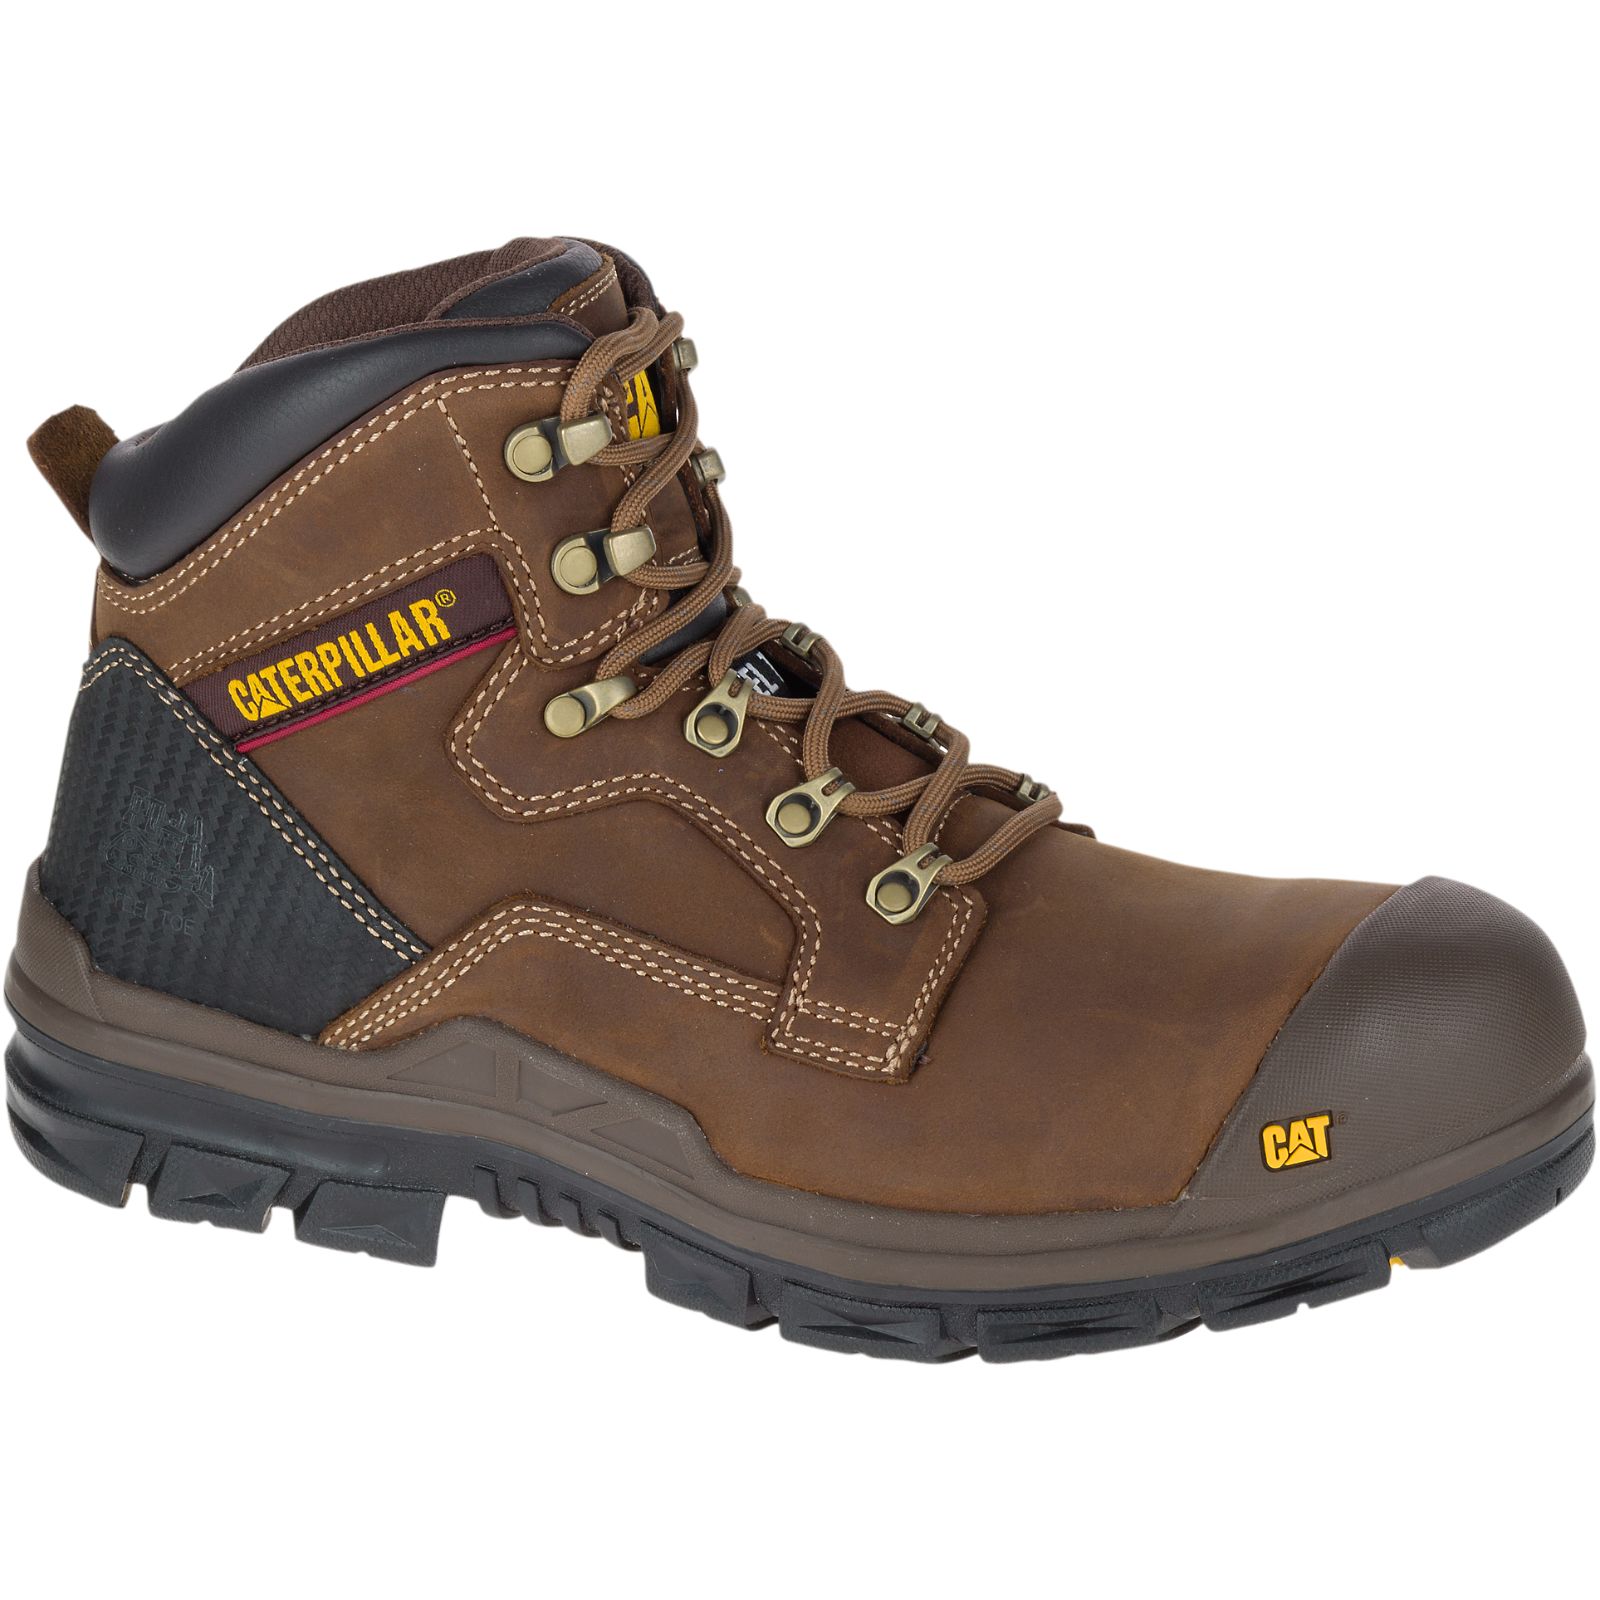 Caterpillar Boots Online - Caterpillar Bearing S3 Water Resistant Hro Src Steel Toe Mens Work Boots Brown (067851-LUR)